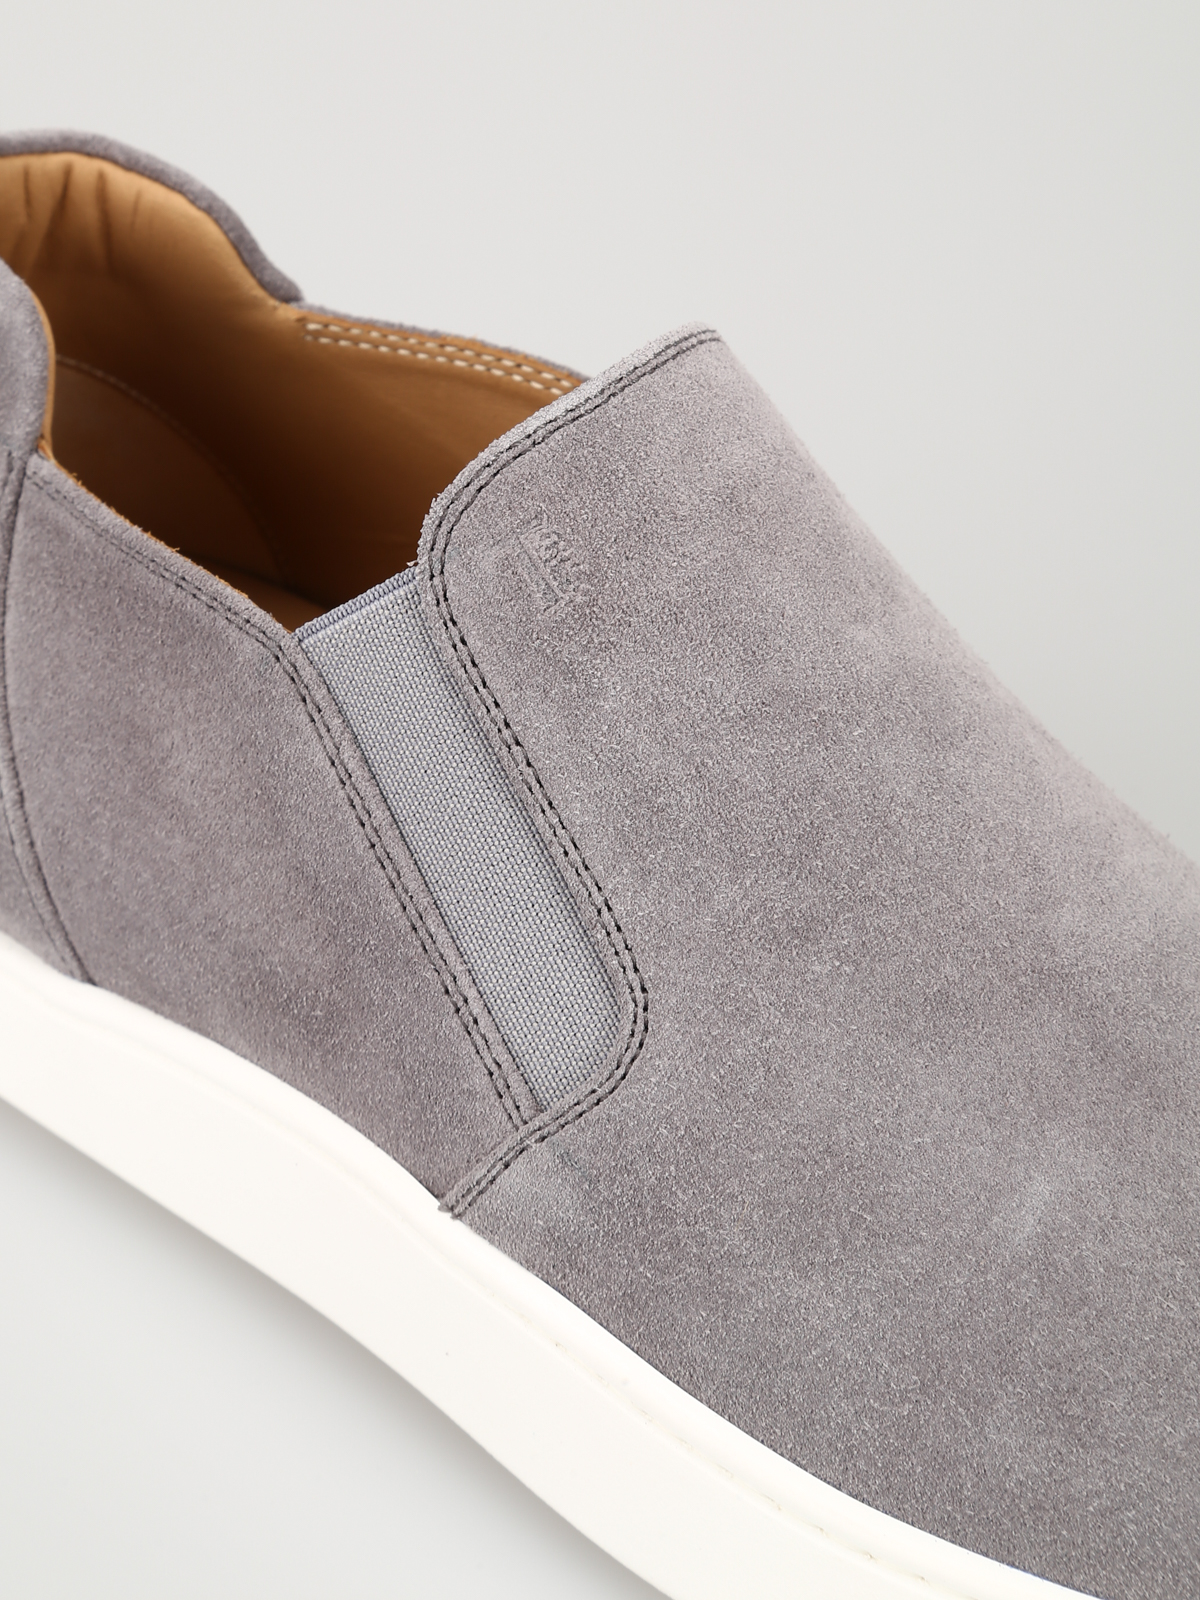 gray suede slip on sneakers